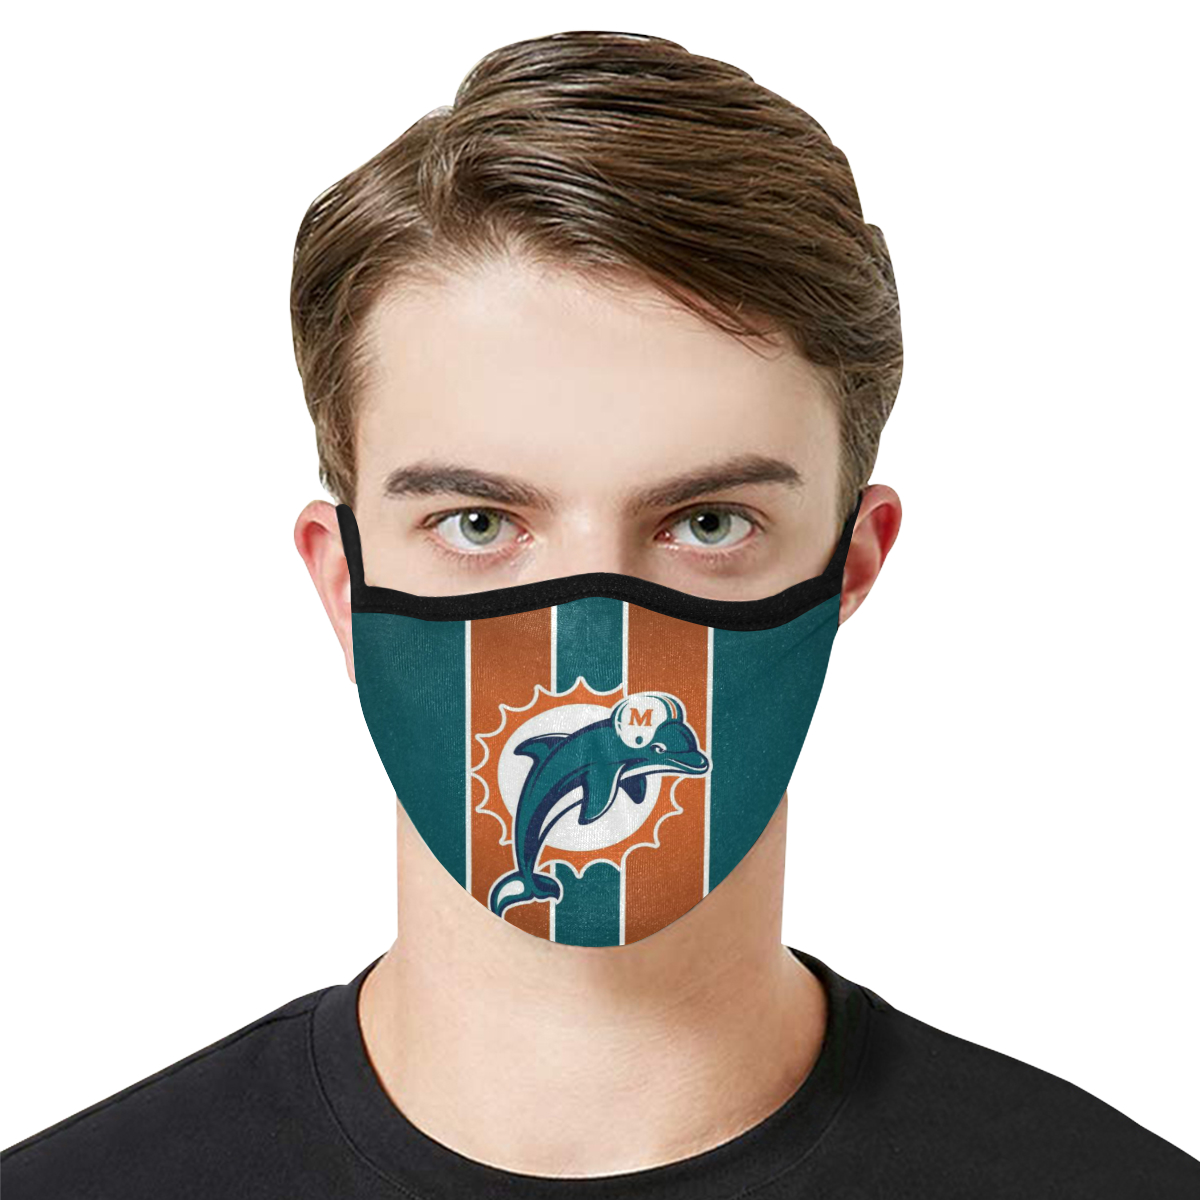 National football league miami dolphins team cotton face mask 1